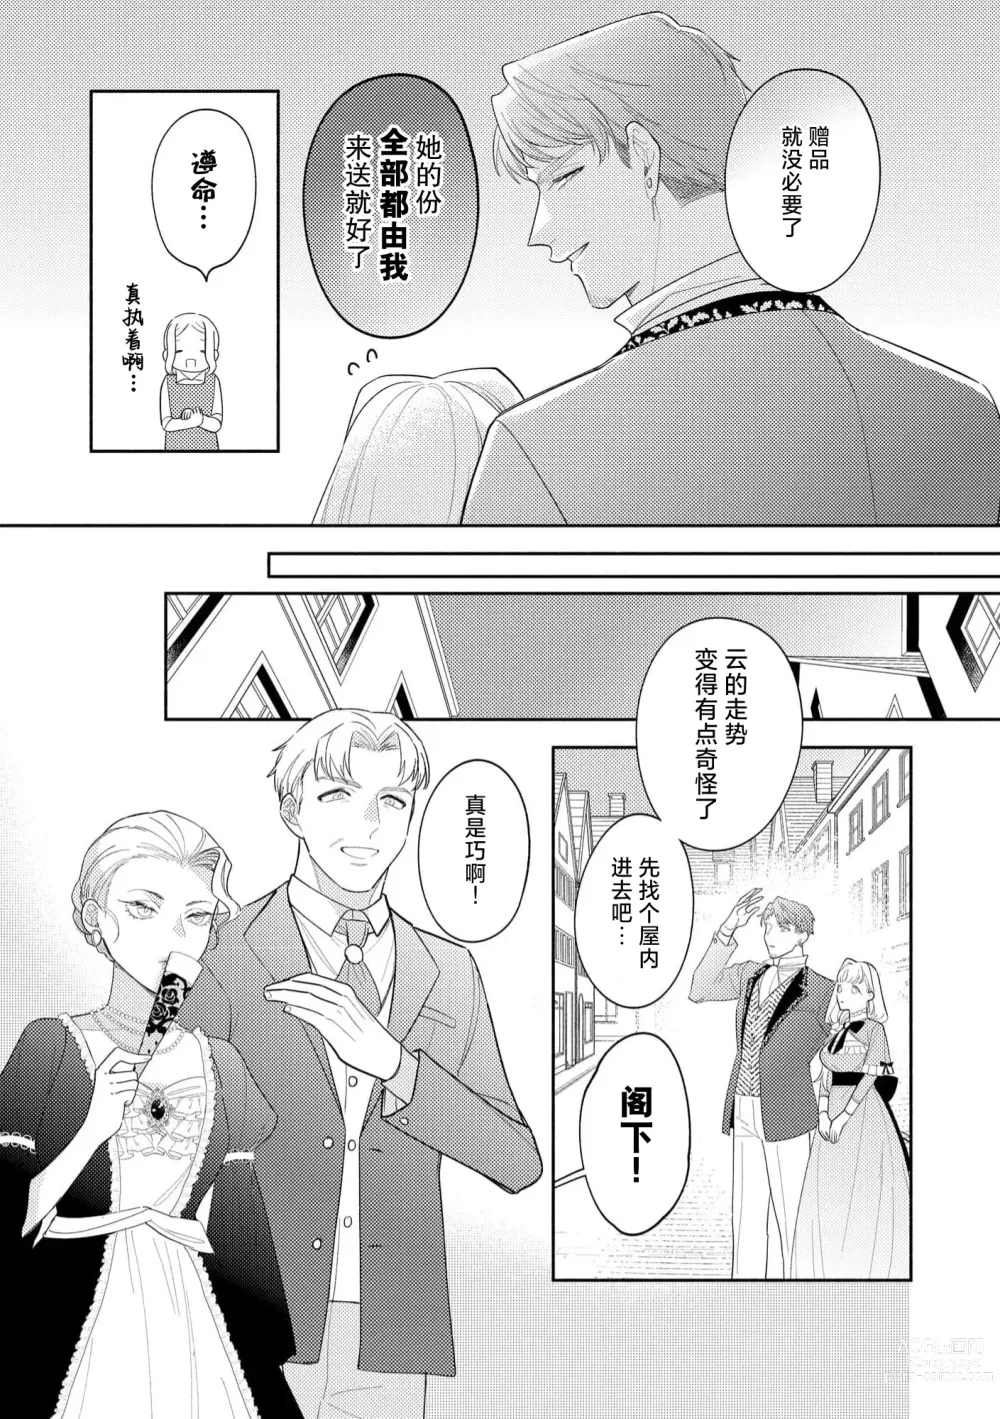 Page 94 of manga 拜启 王弟殿下、 本该是限定一夜但婚约的申请却是意料之外！1-3